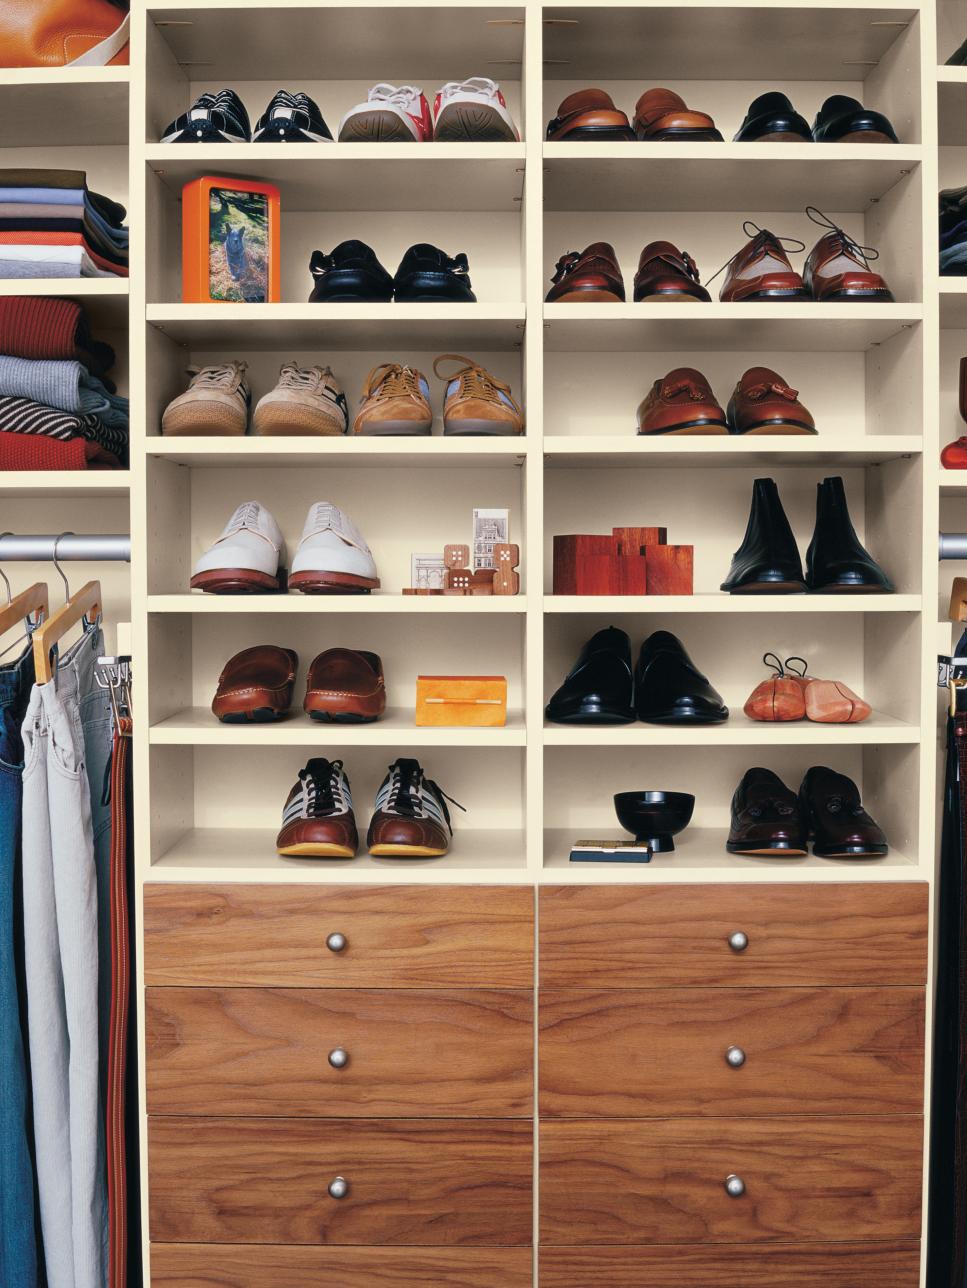 Zapatera  Closet shoe storage, Closet hacks organizing, Closet bedroom